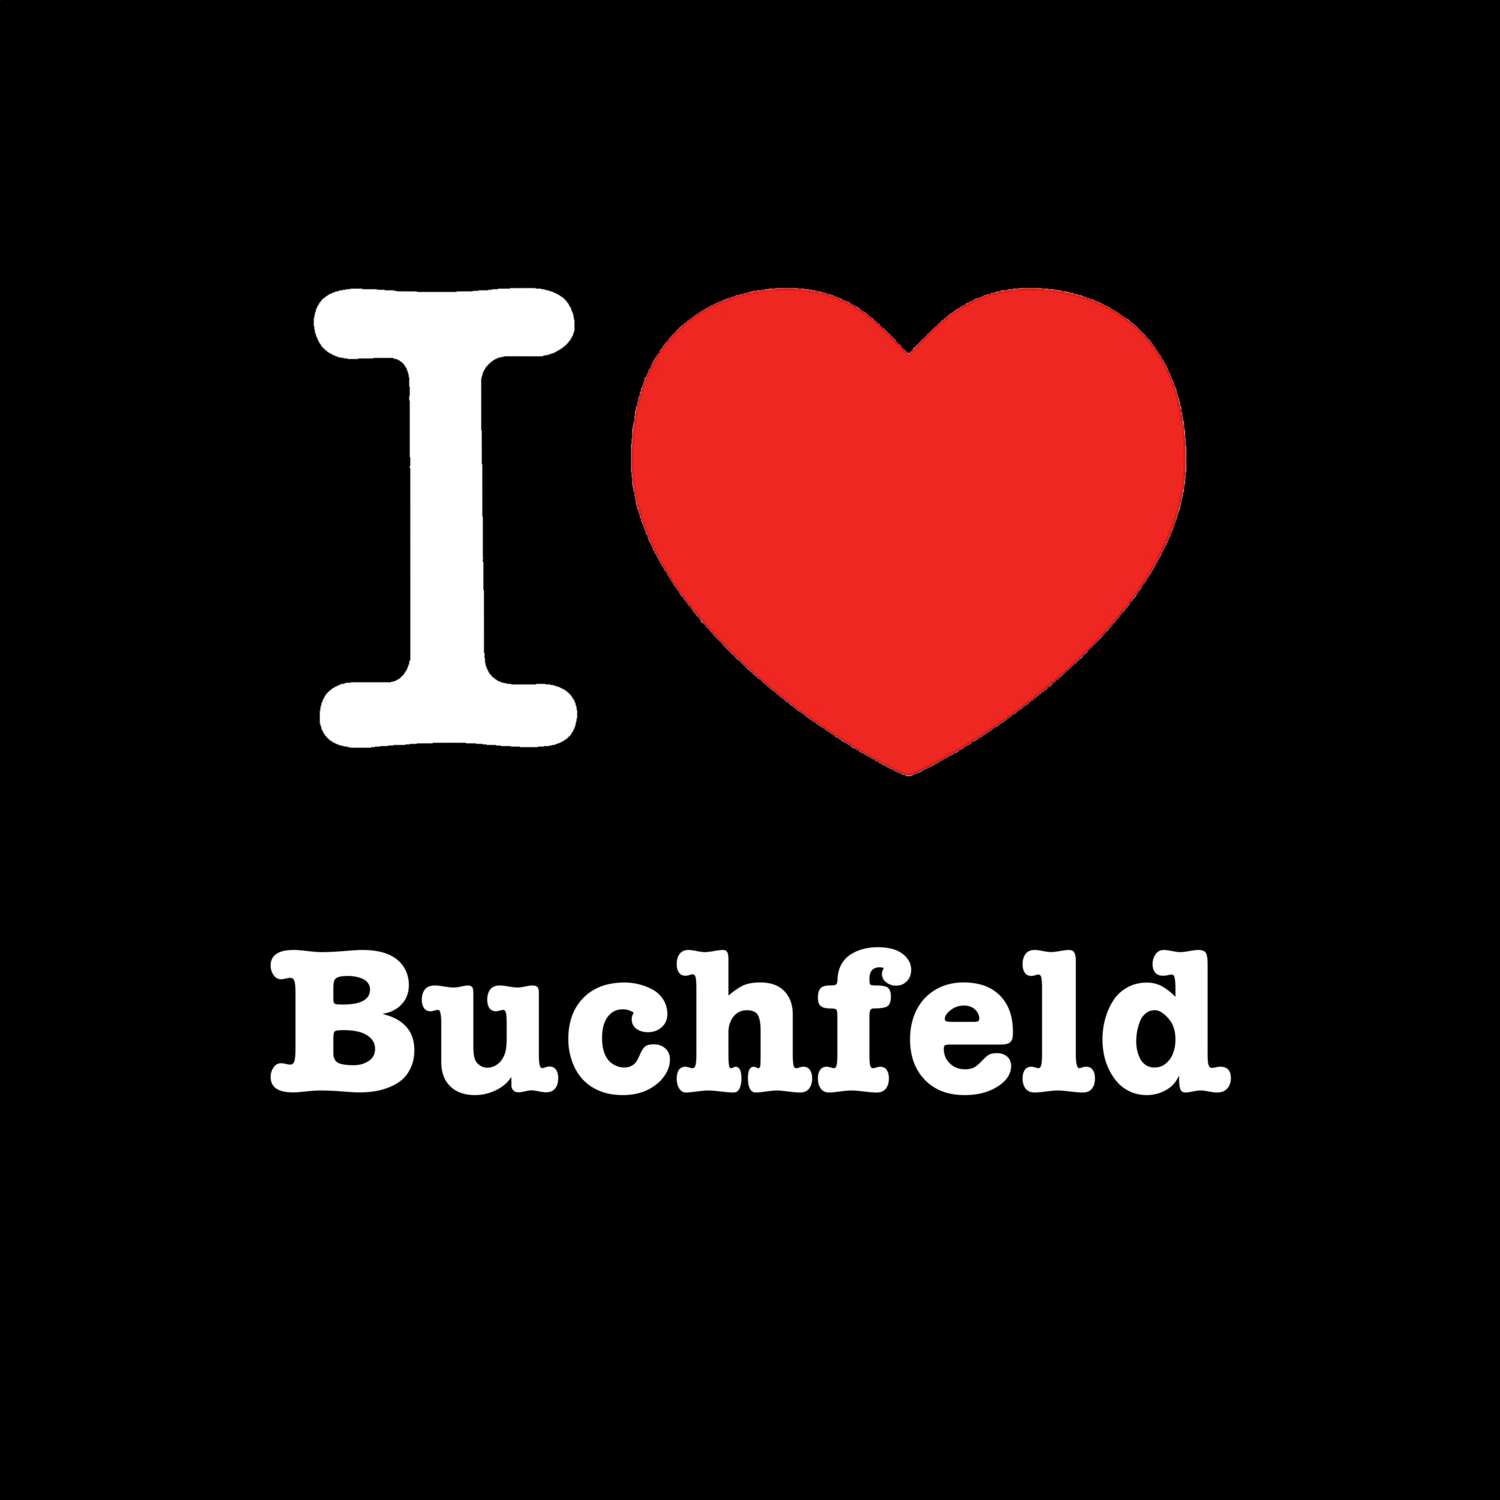 Buchfeld T-Shirt »I love«